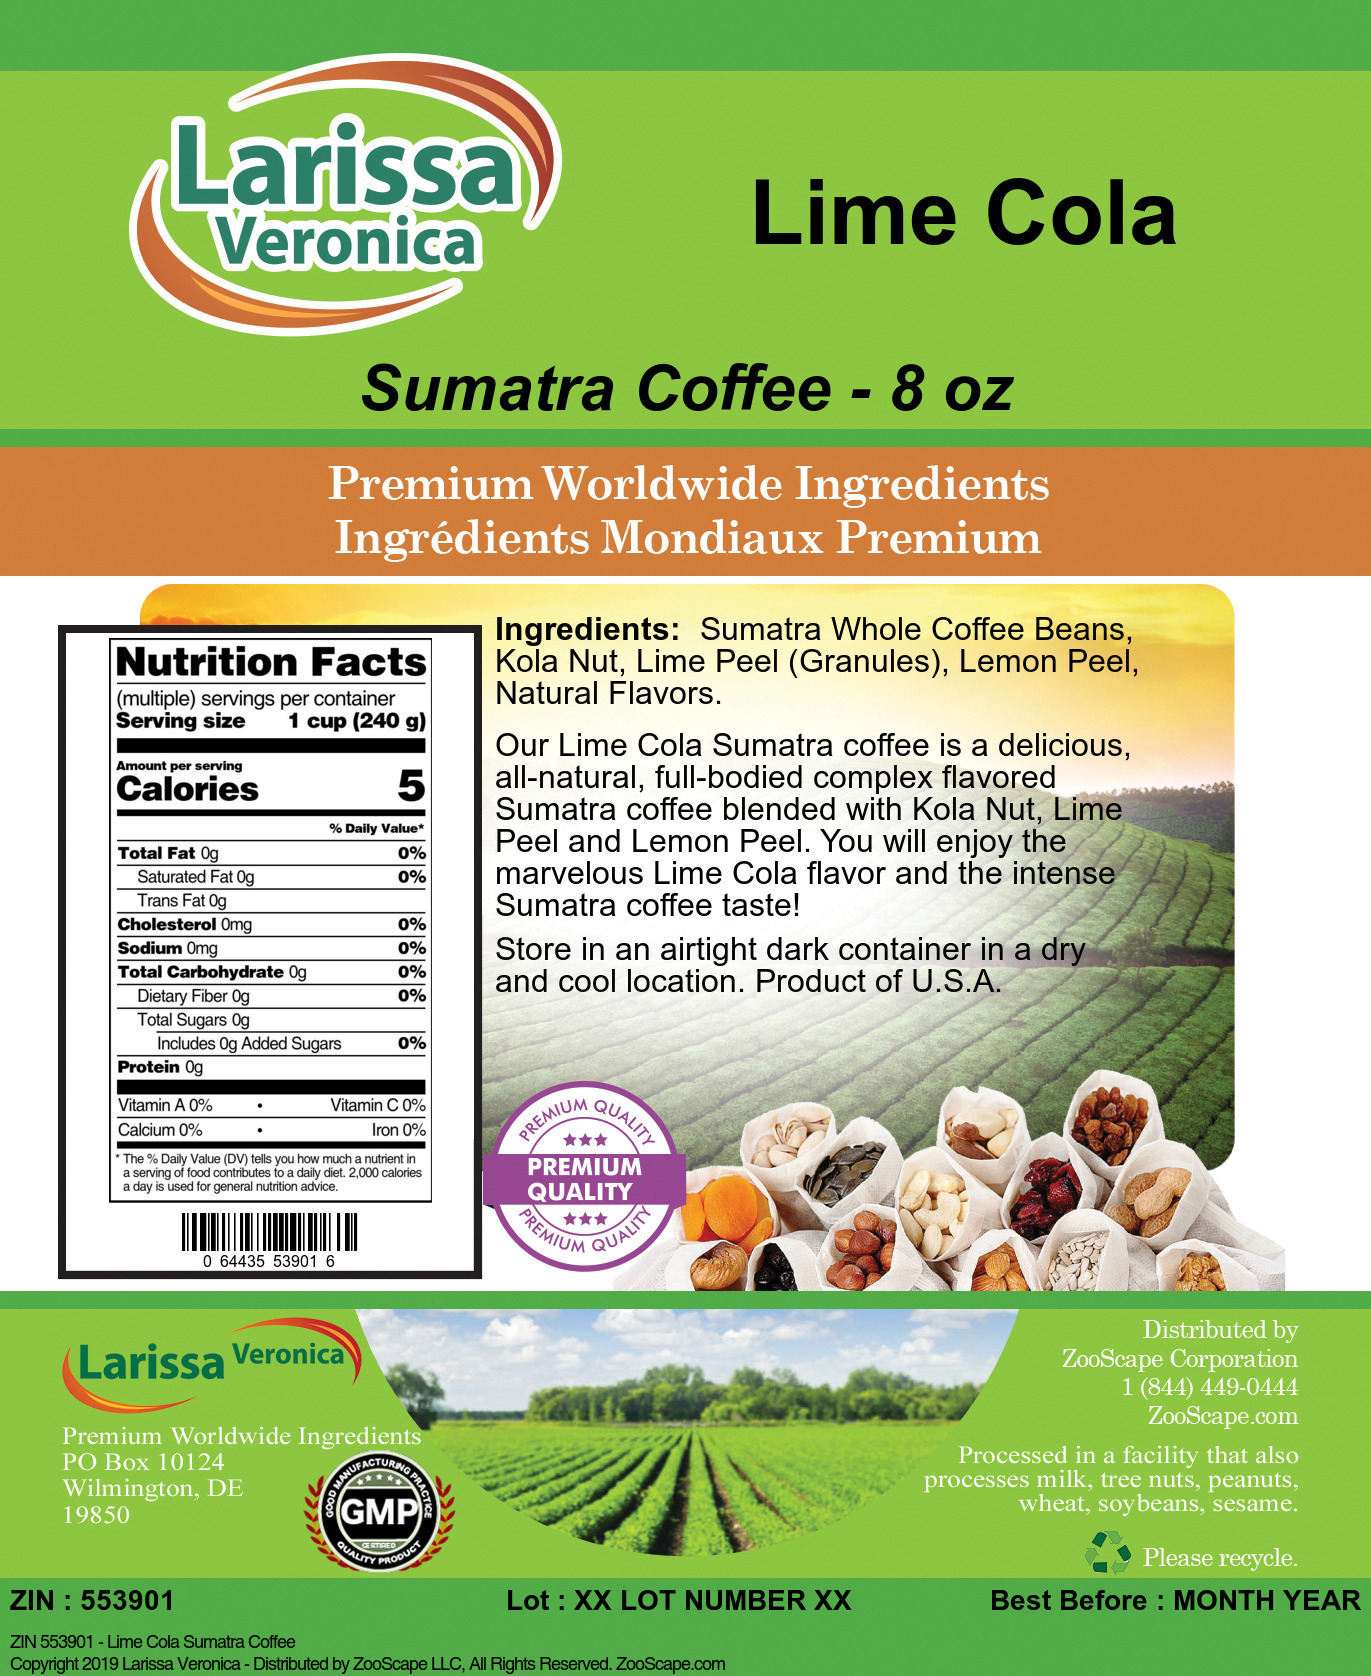 Lime Cola Sumatra Coffee - Label